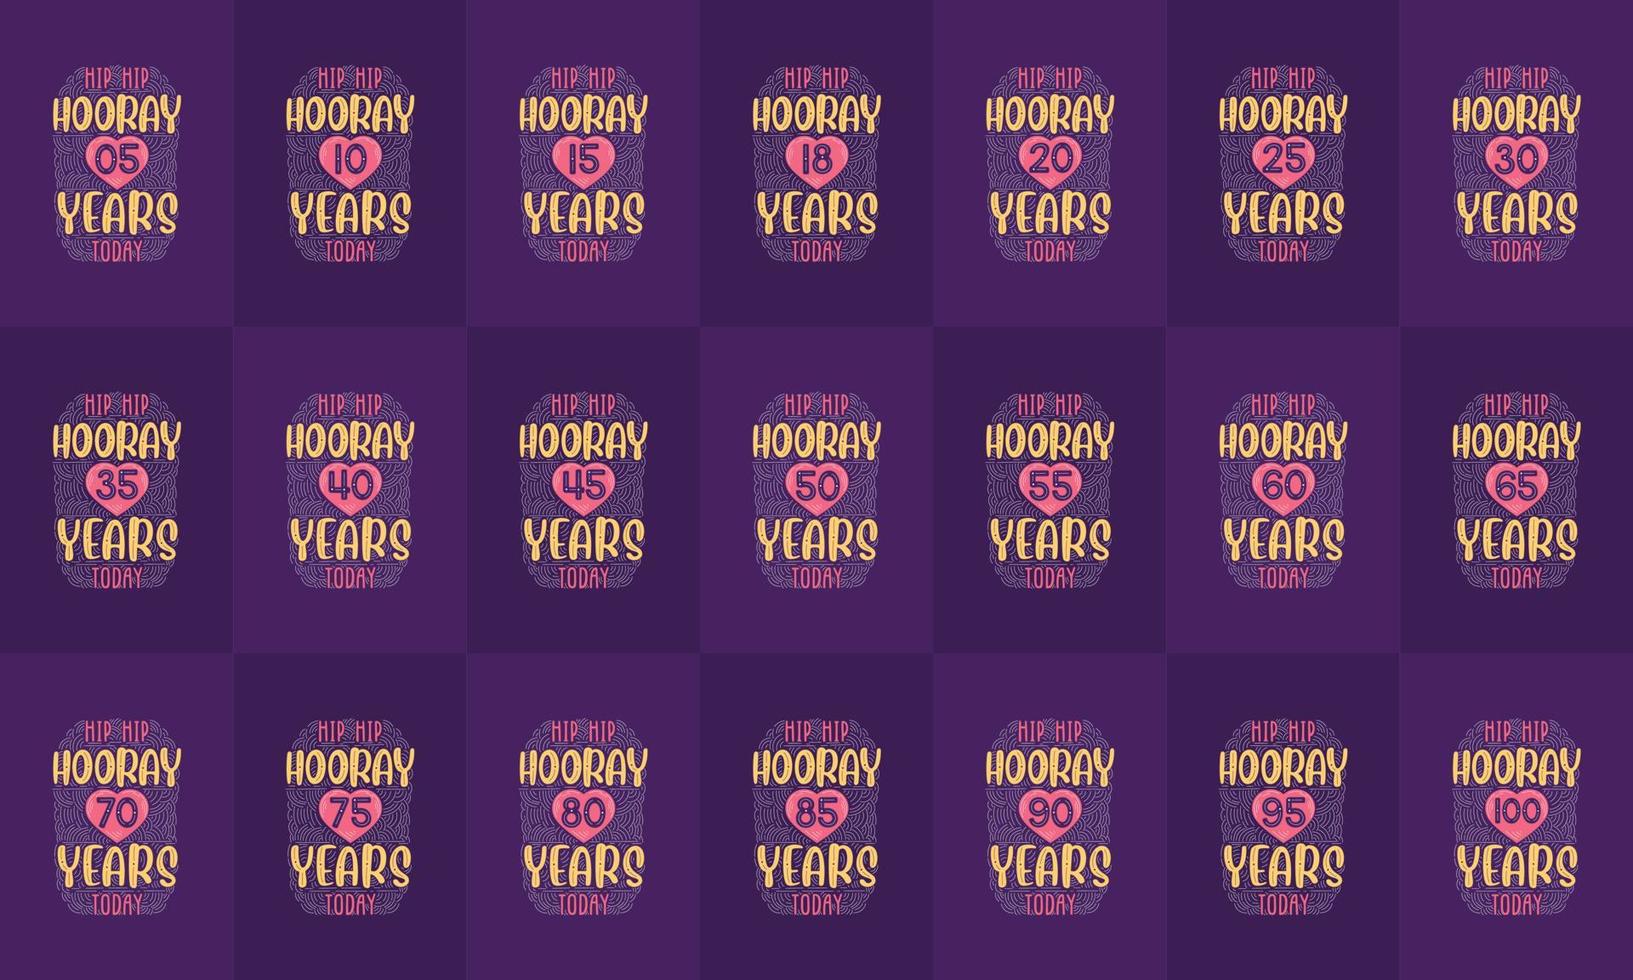 Birthday design mega bundle. Set of 21 Birthday quote Typography bundle. Hip Hip Hooray 5, 10, 15, 20, 25, 30, 35, 40, 45, 50, 55, 60, 65, 70, 75, 80, 85, 90, 95, 100 years today vector